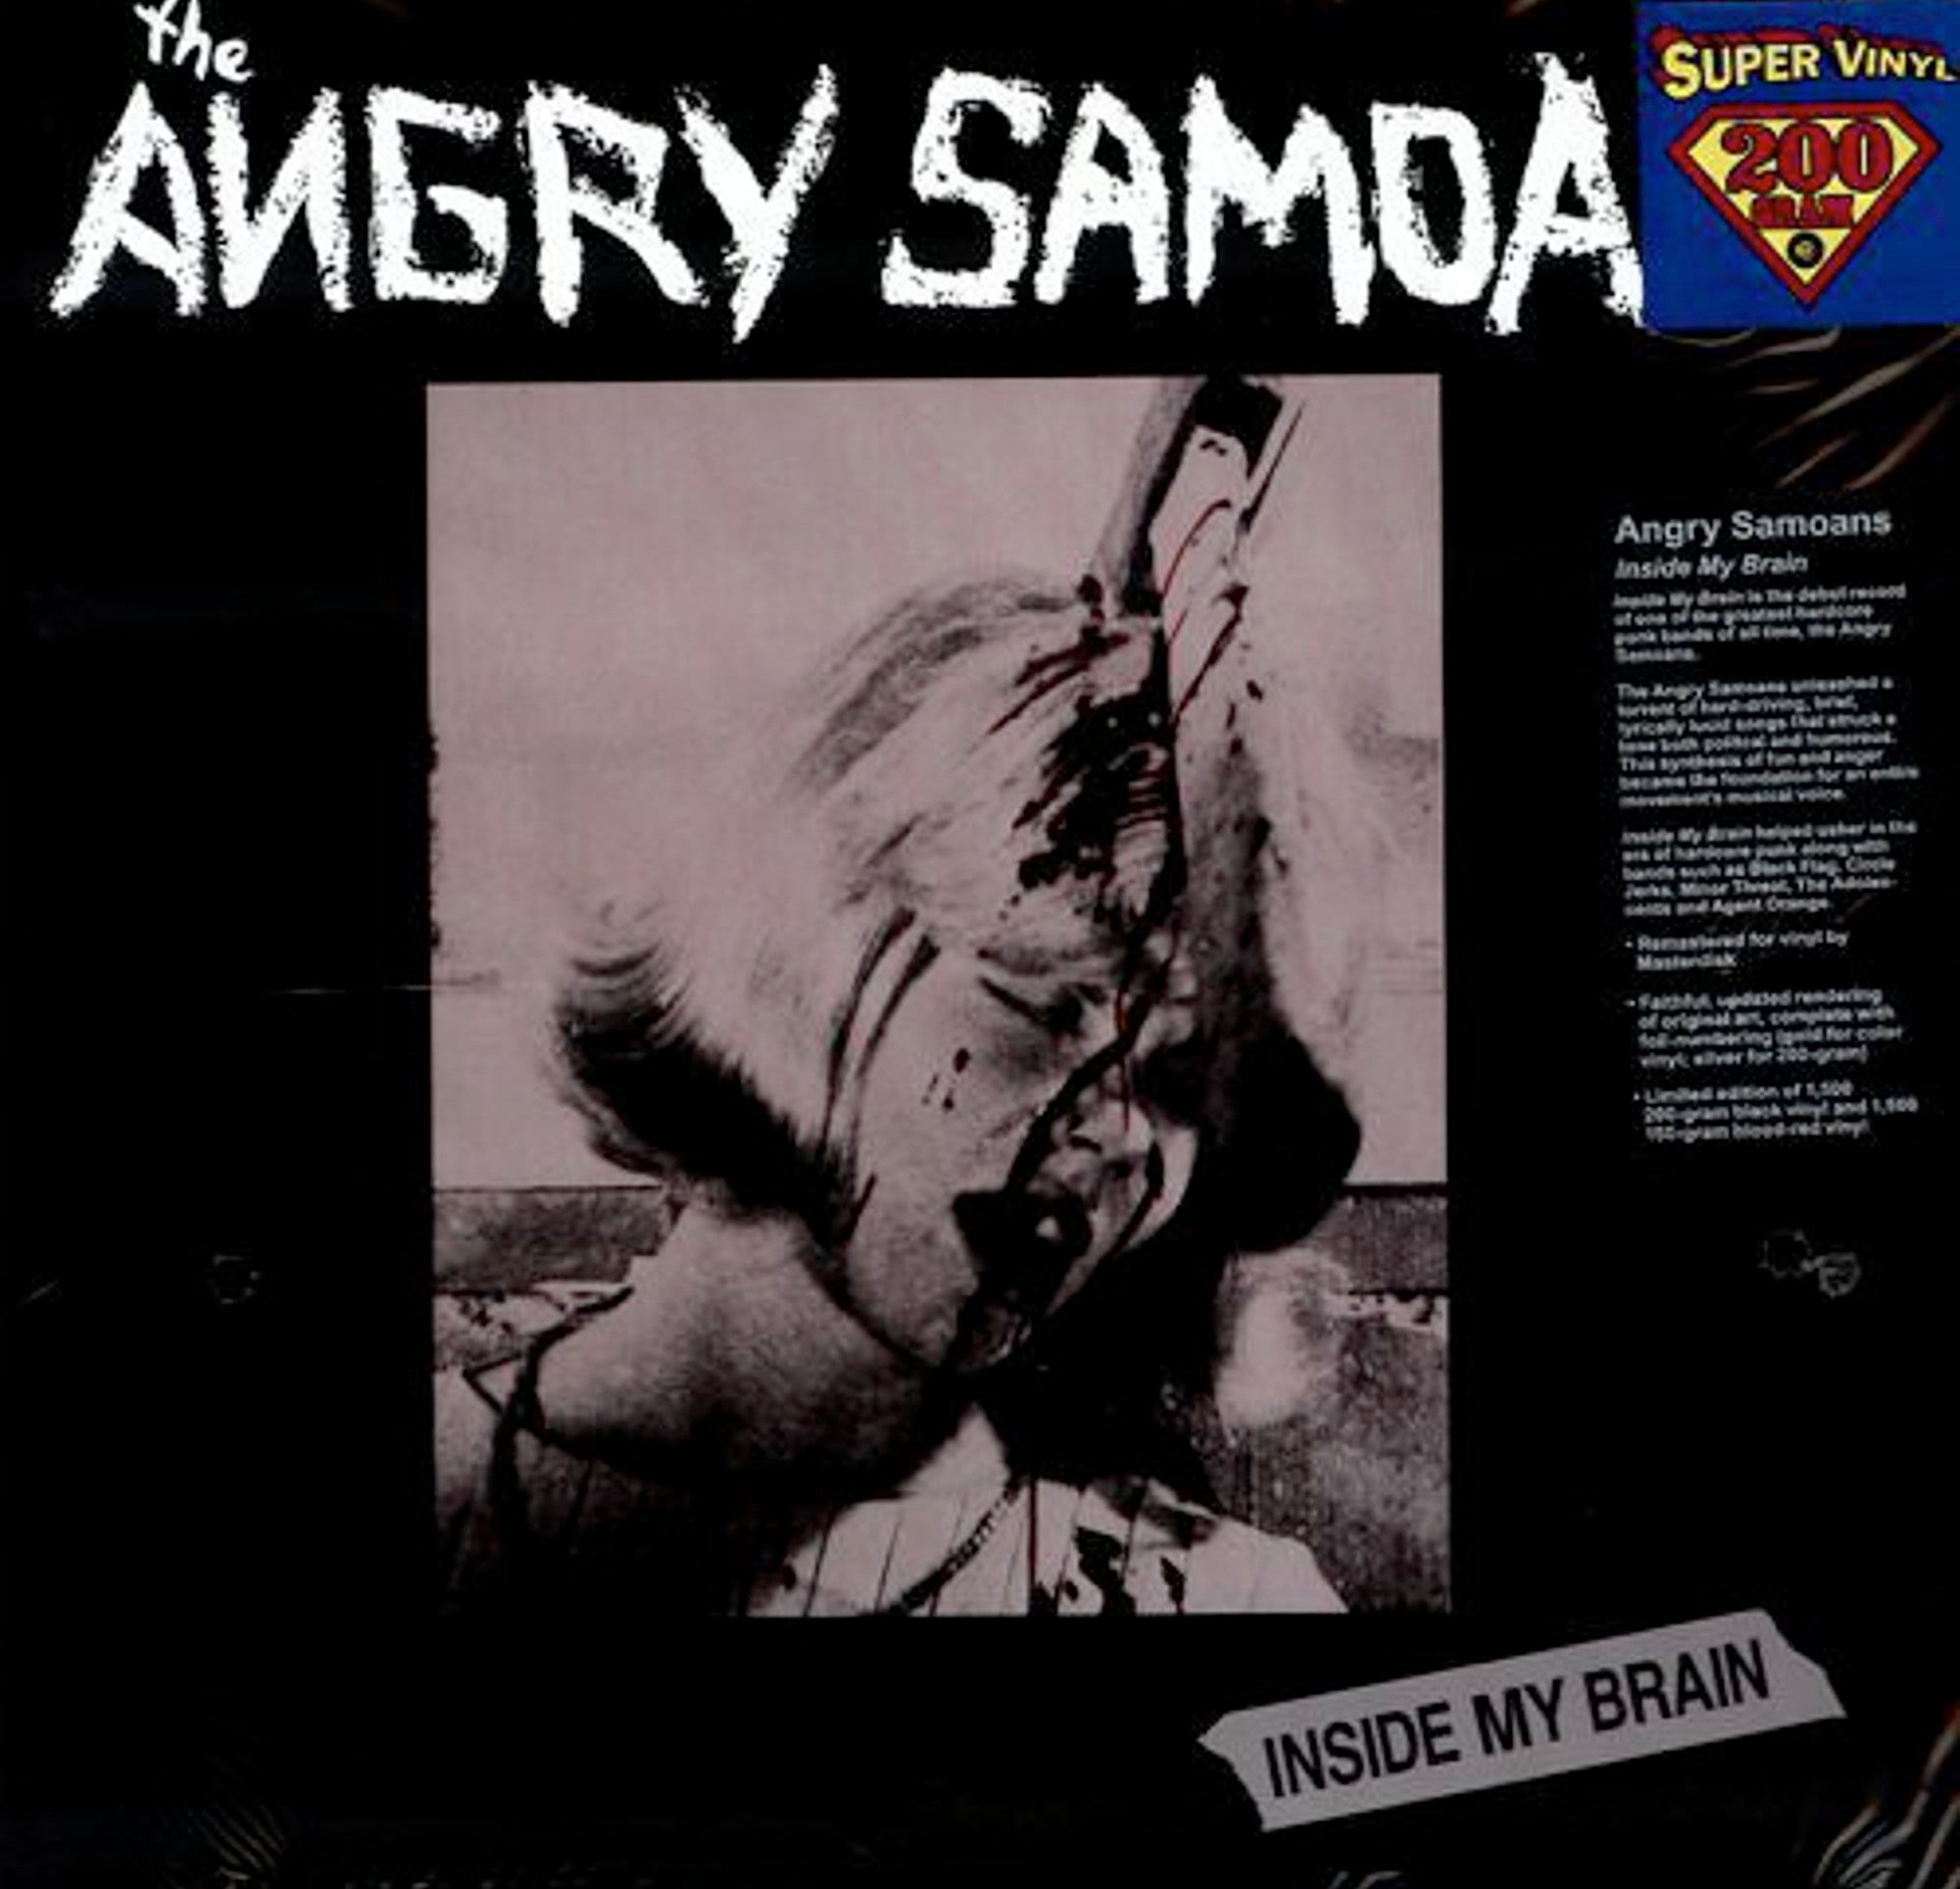 ANGRY SAMOANS - Inside My Brain 12"